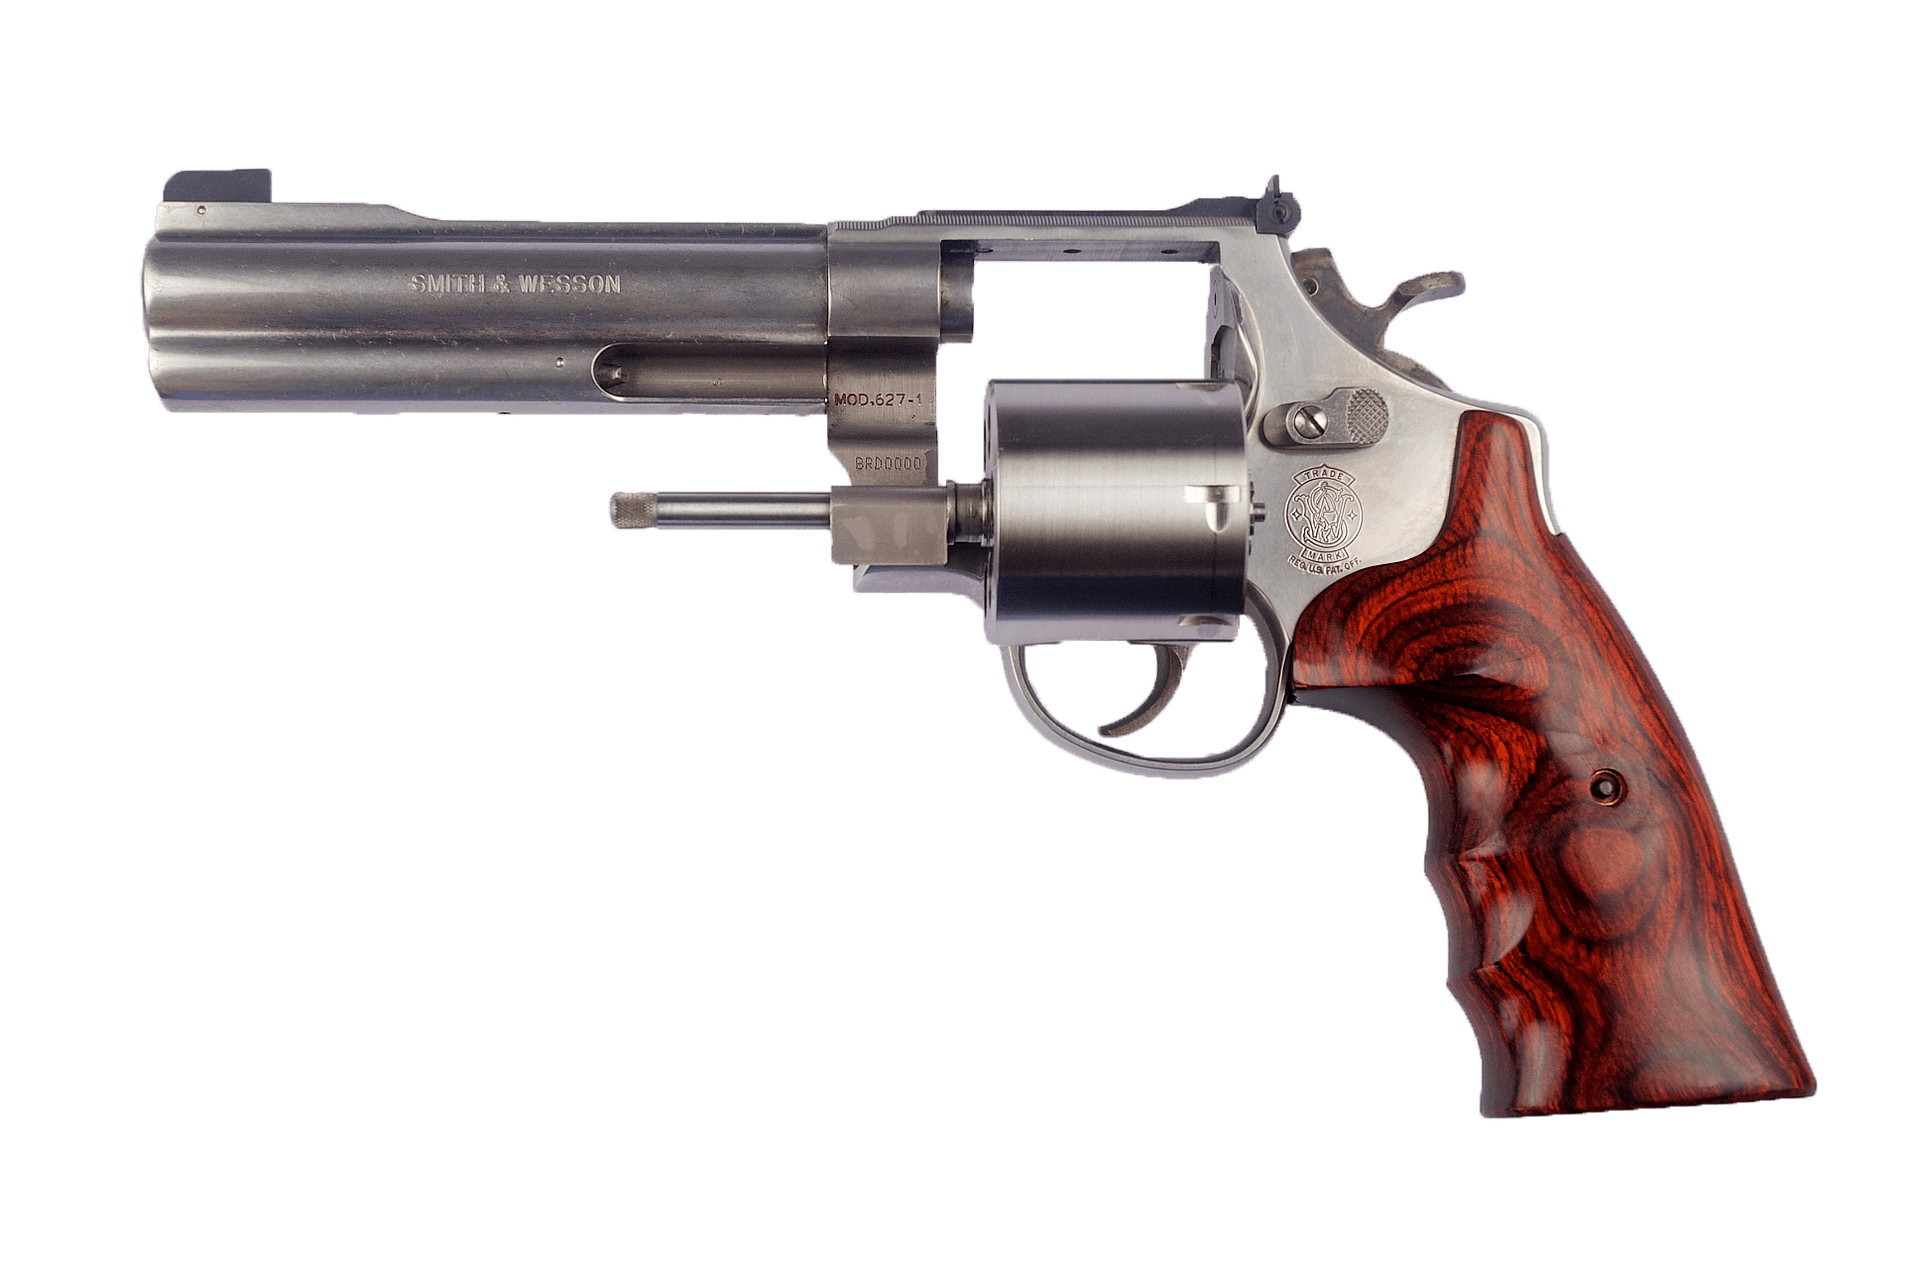 Smith and Wessen handgun | Source: Pixabay